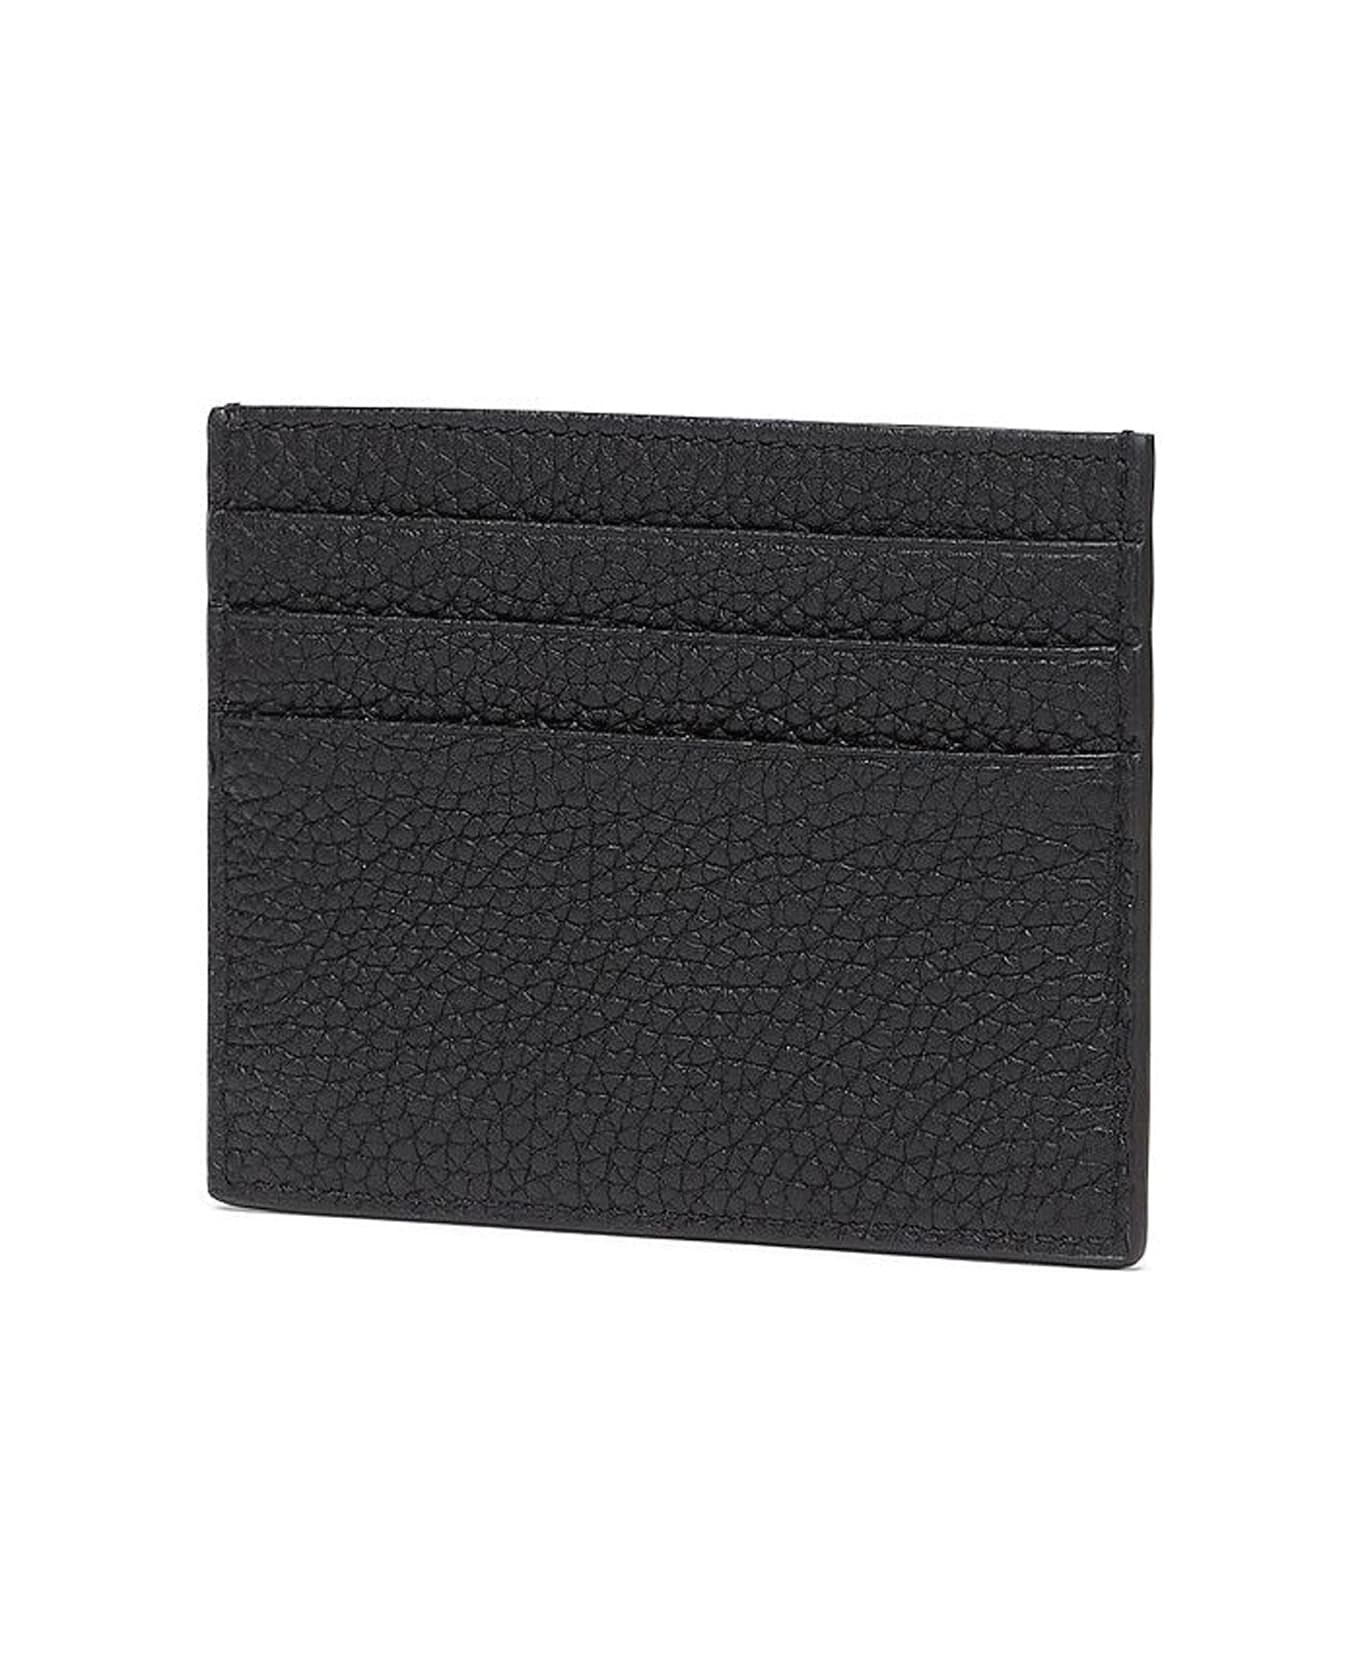 Fendi Business Card Holder - Black